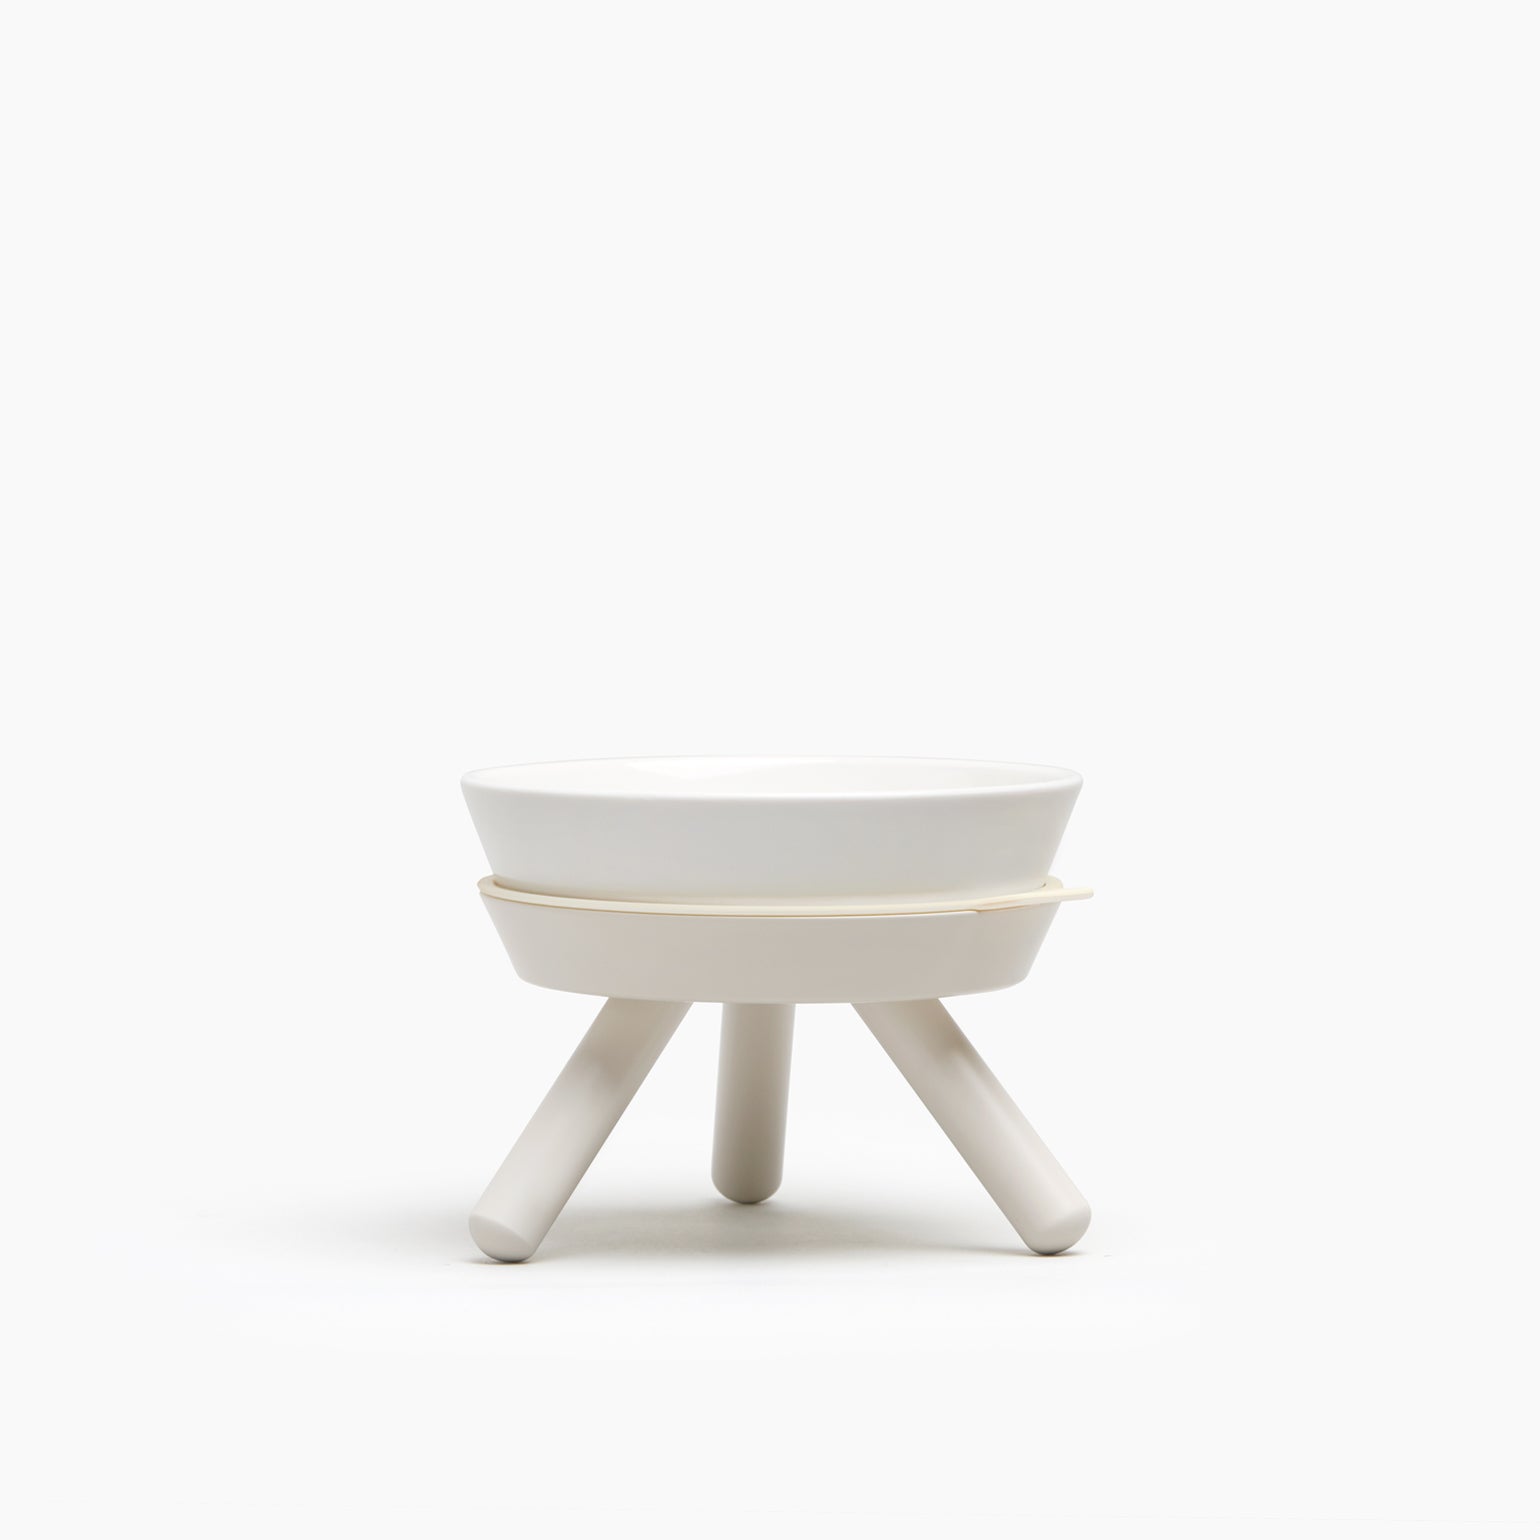 INHERENT -  OREO TABLE WHITE, SHORT SMALL